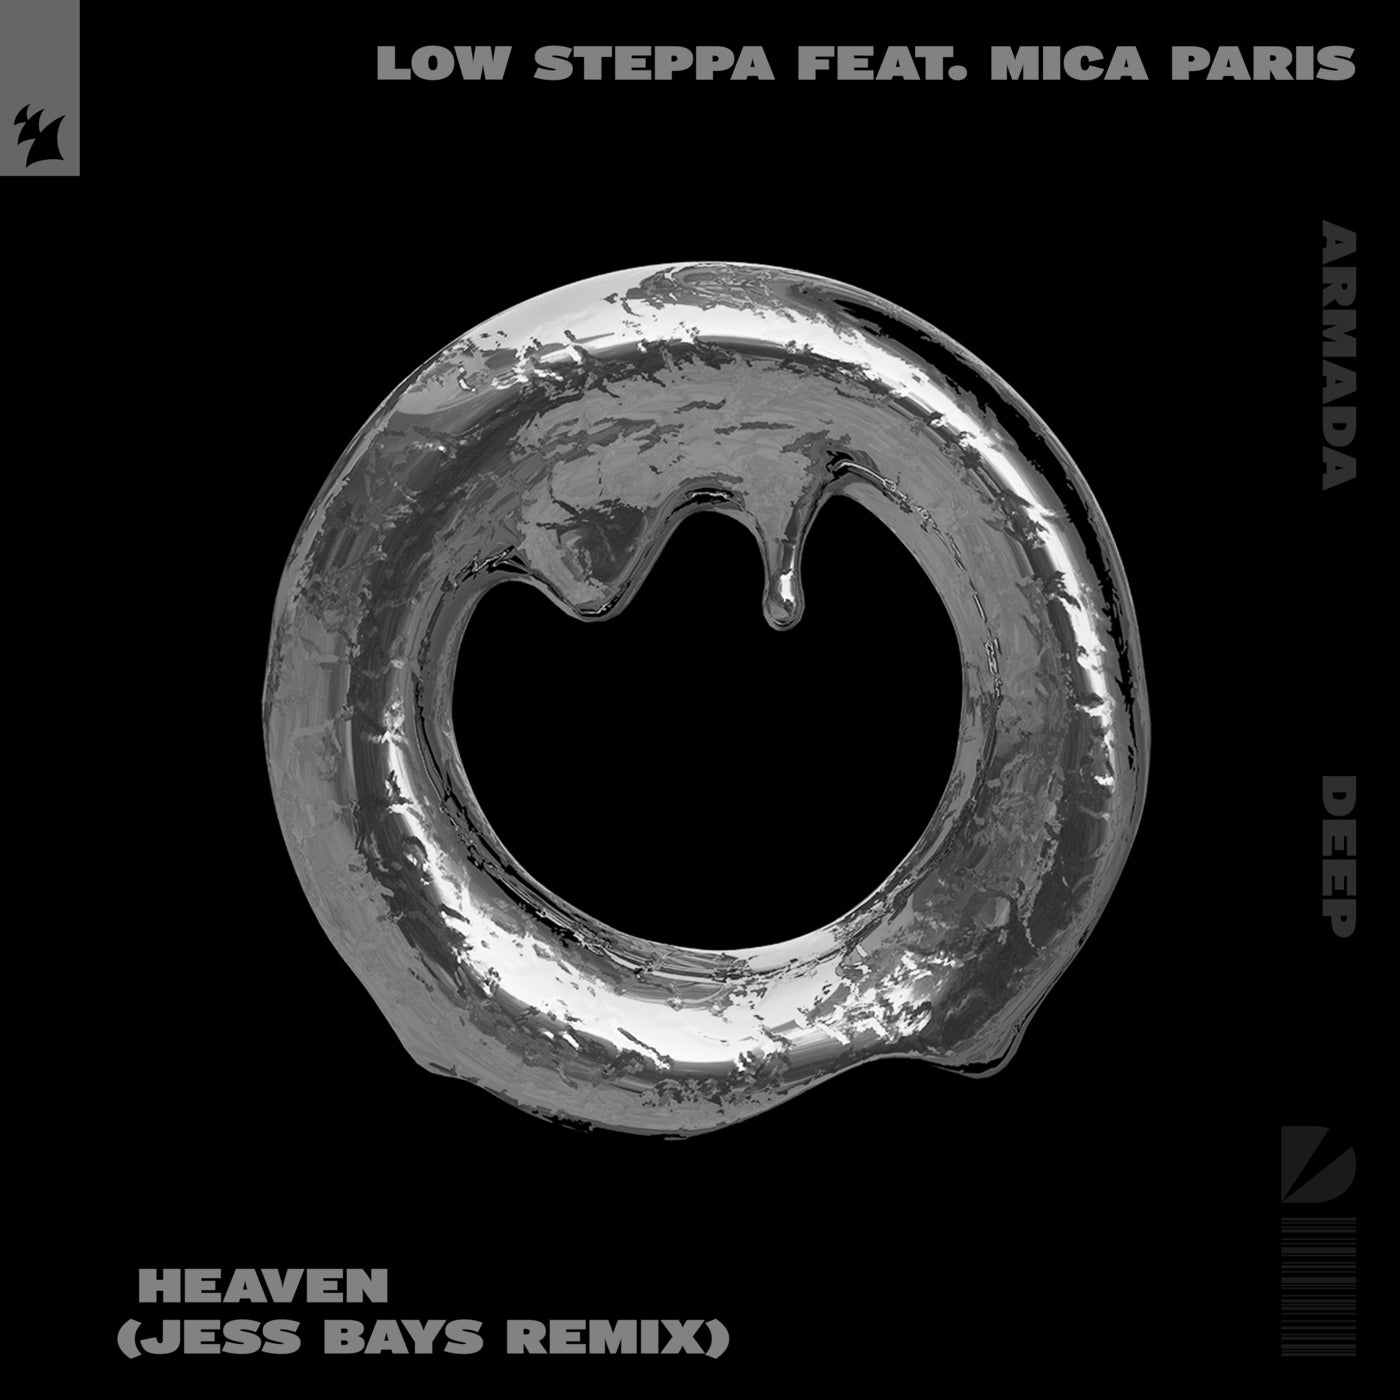 Heaven - Jess Bays Remix